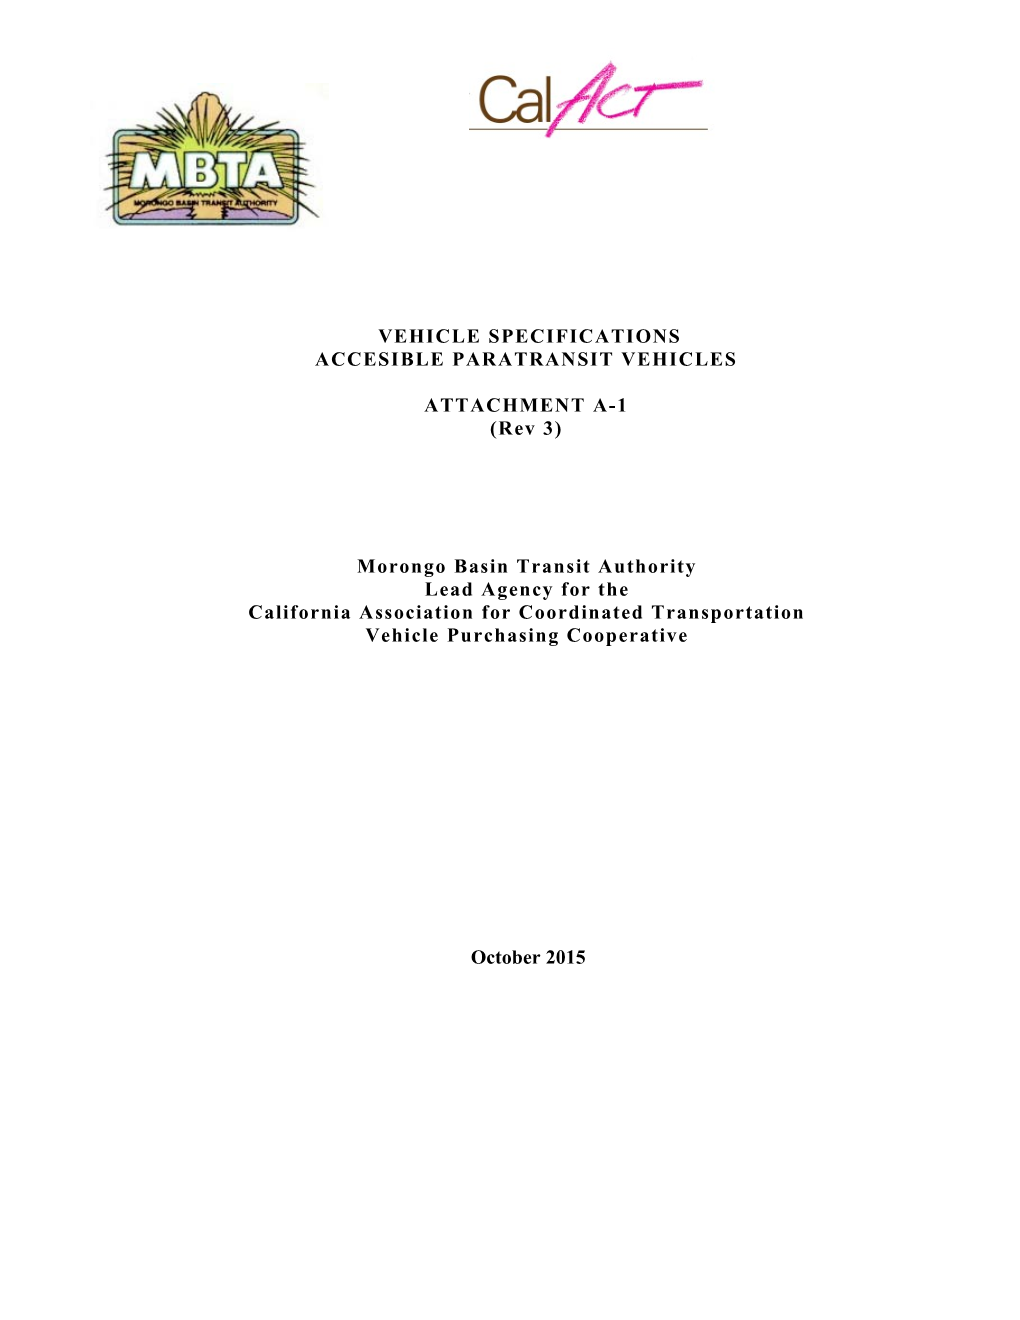 Calact/MBTA Vehicle Purchasing Cooperative RFP 15-03 Attachment A-1